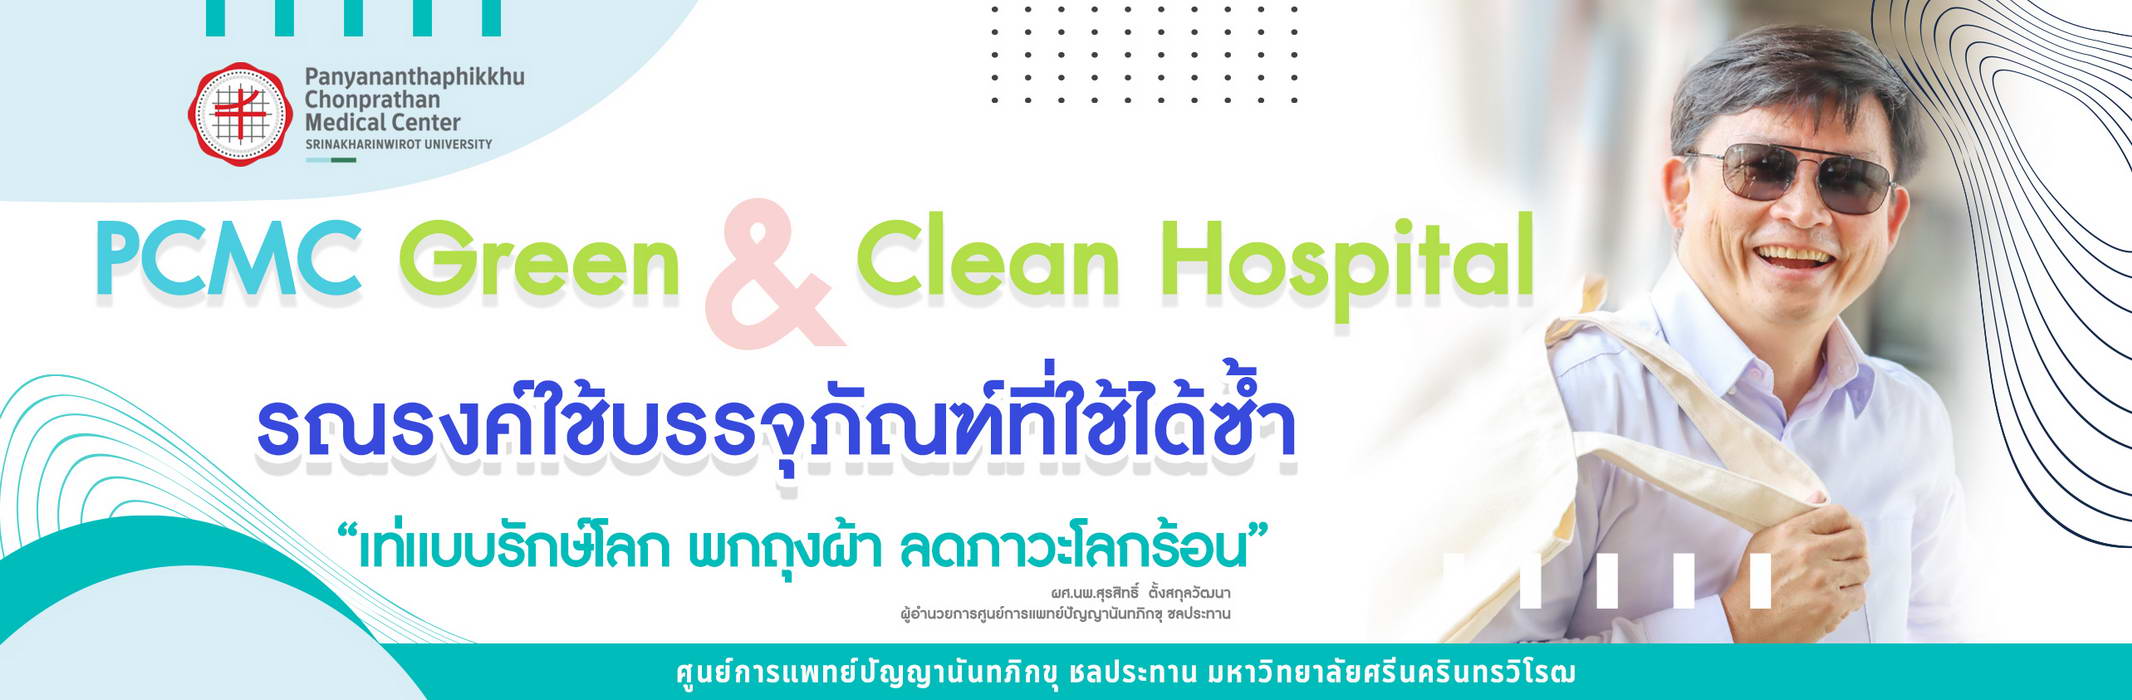 PCMC Green & Clean Hospital ศูนย์การแพทย์ฯ ชลประทาน